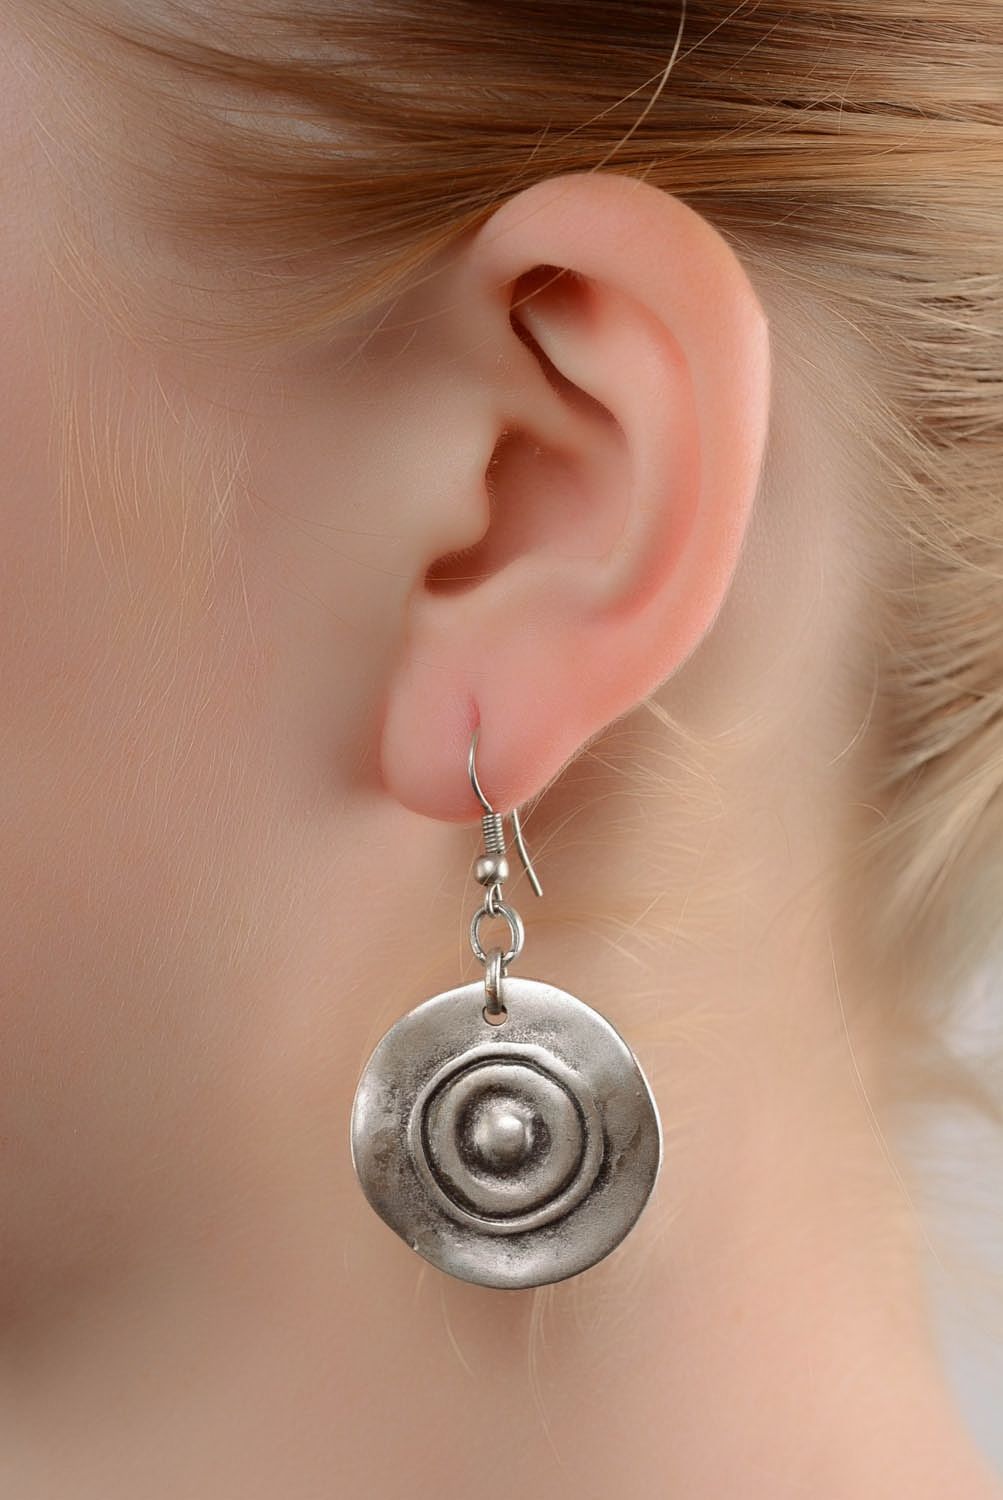 Silvered earrings photo 4